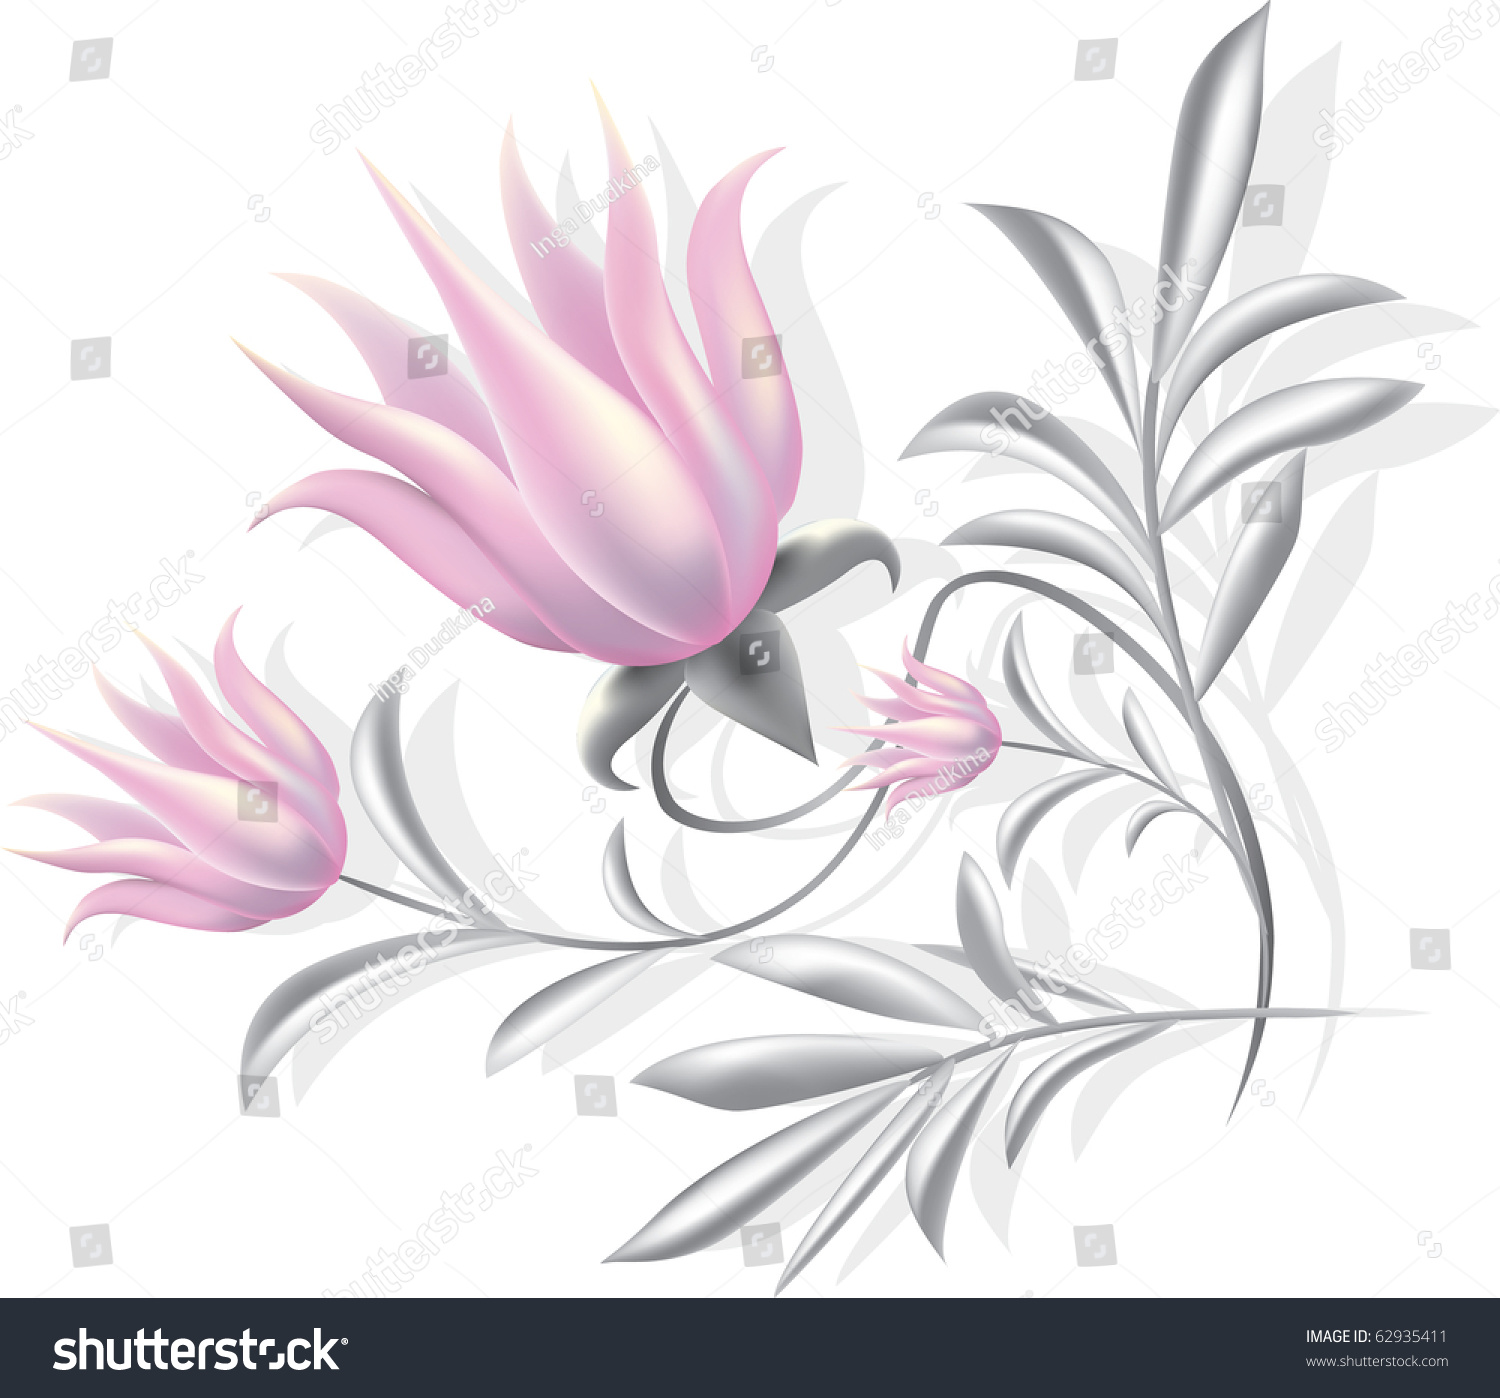 Flower On A White Background Stock Vector Illustration 62935411